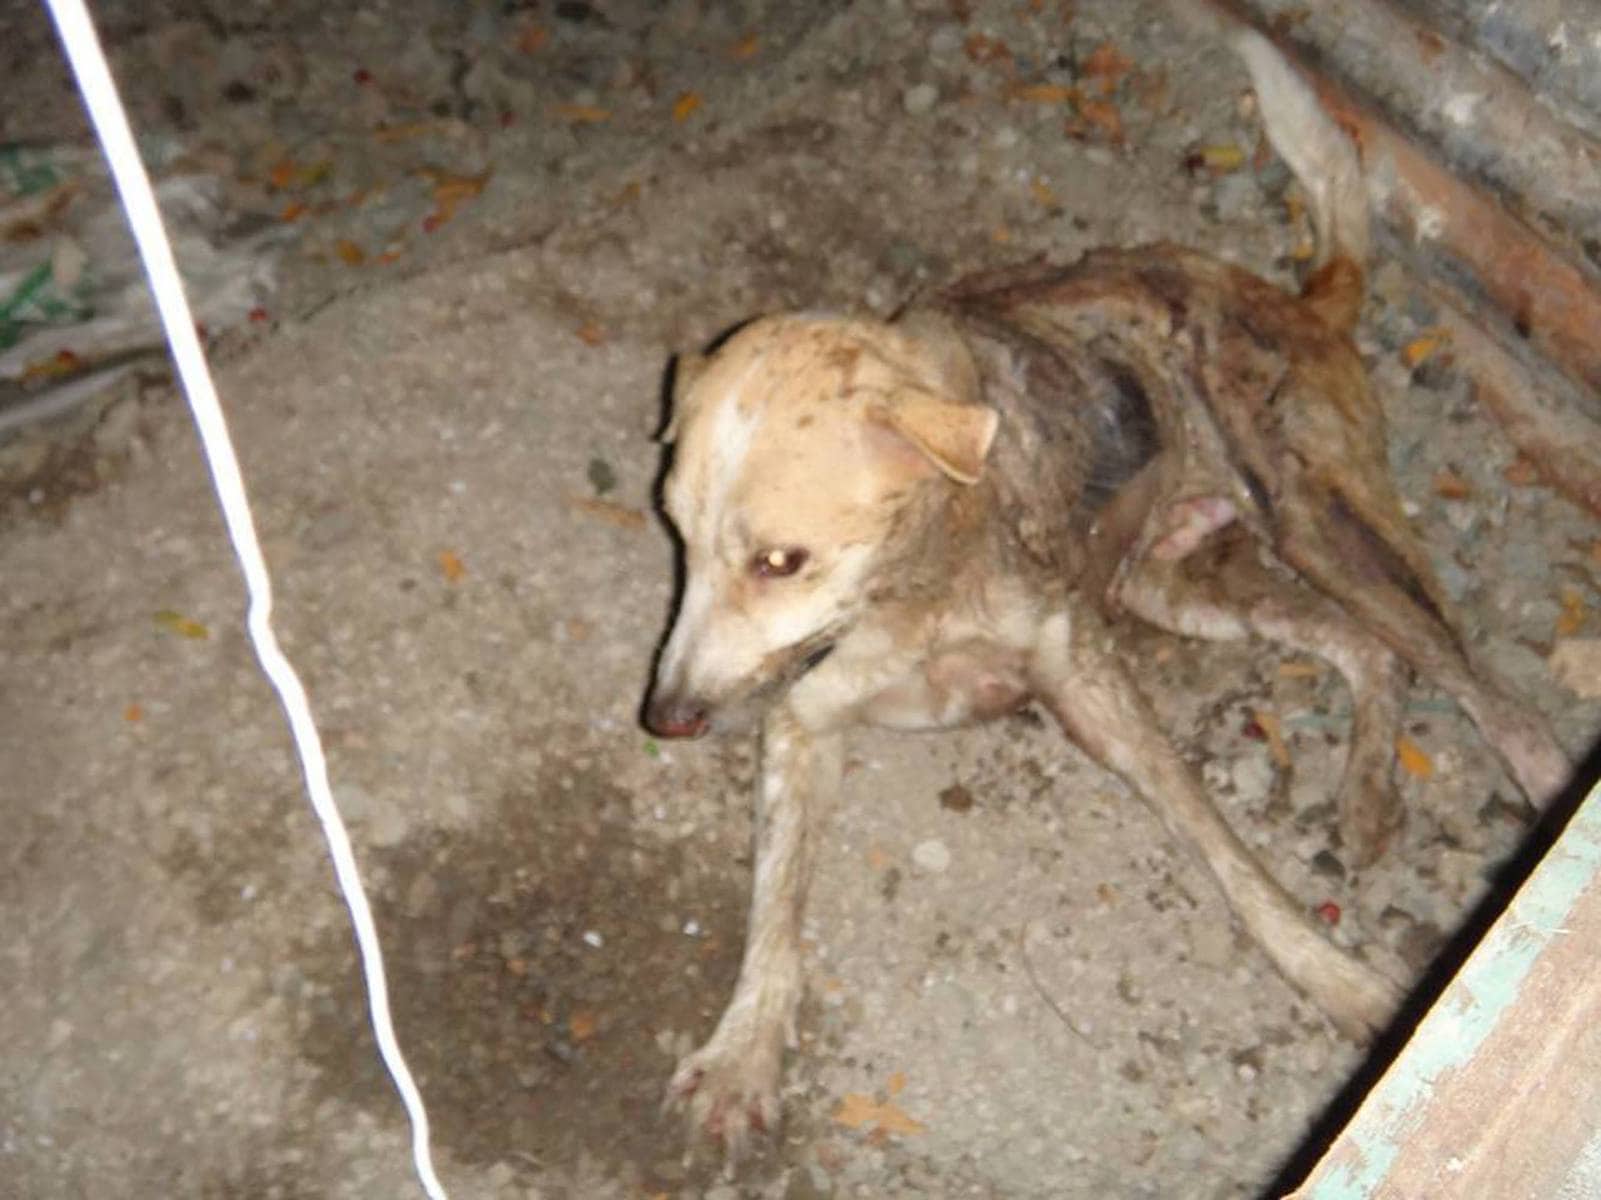 Sulfuric acid burns dog – Life With Dogs